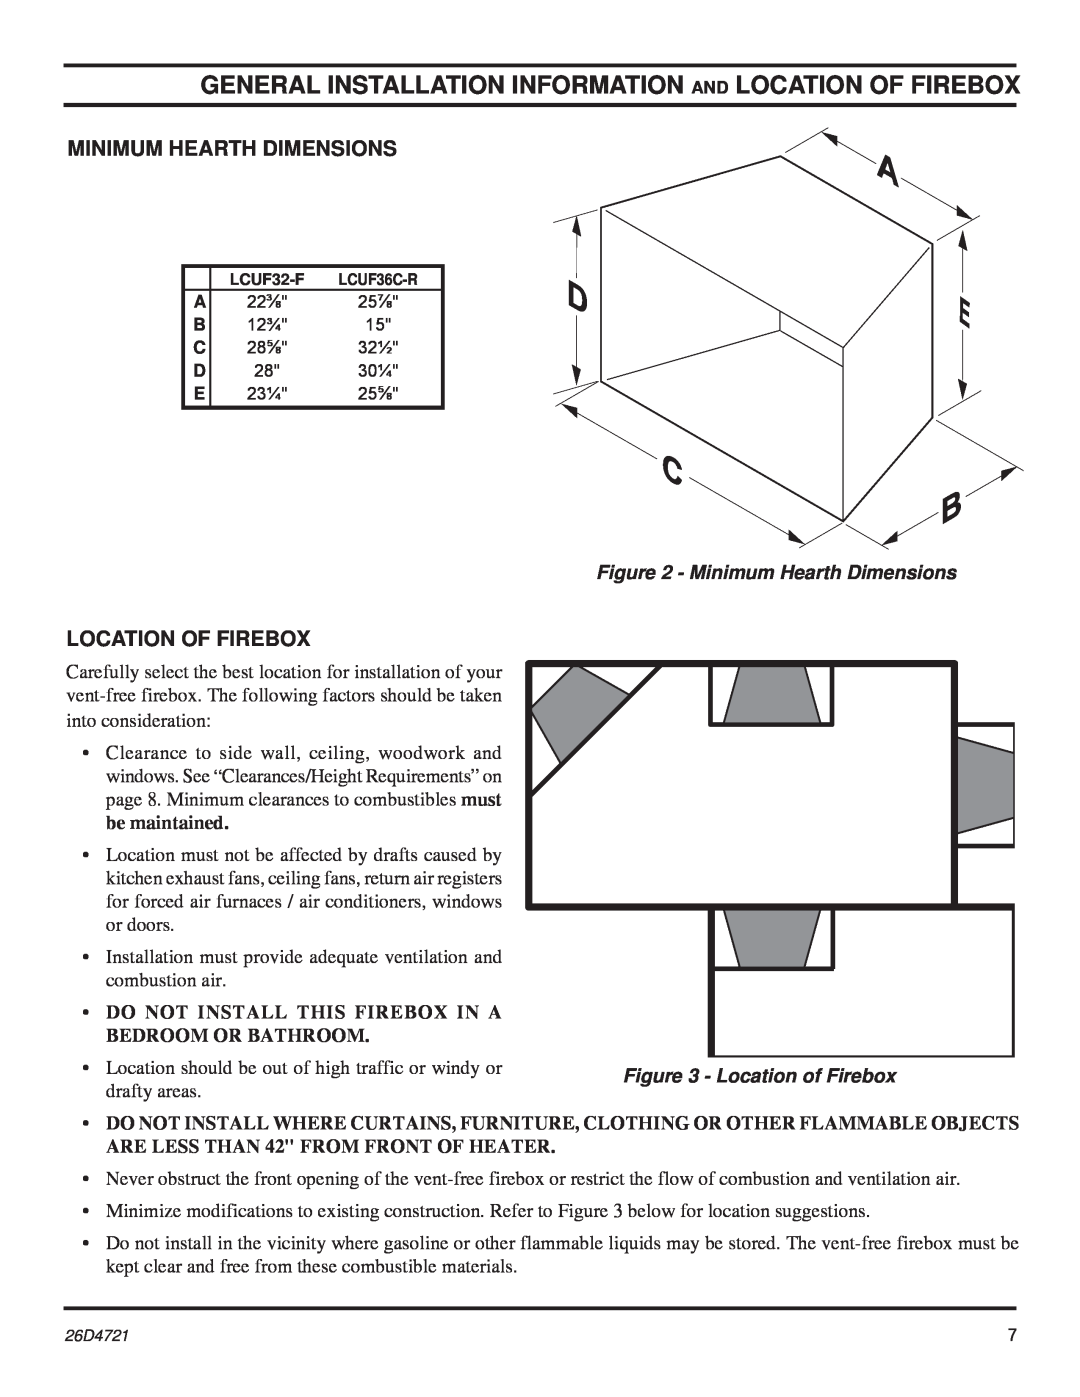 Monessen Hearth LCUF32-F dimensions Minimum Hearth Dimensions, Location Of Firebox, Location of Firebox 